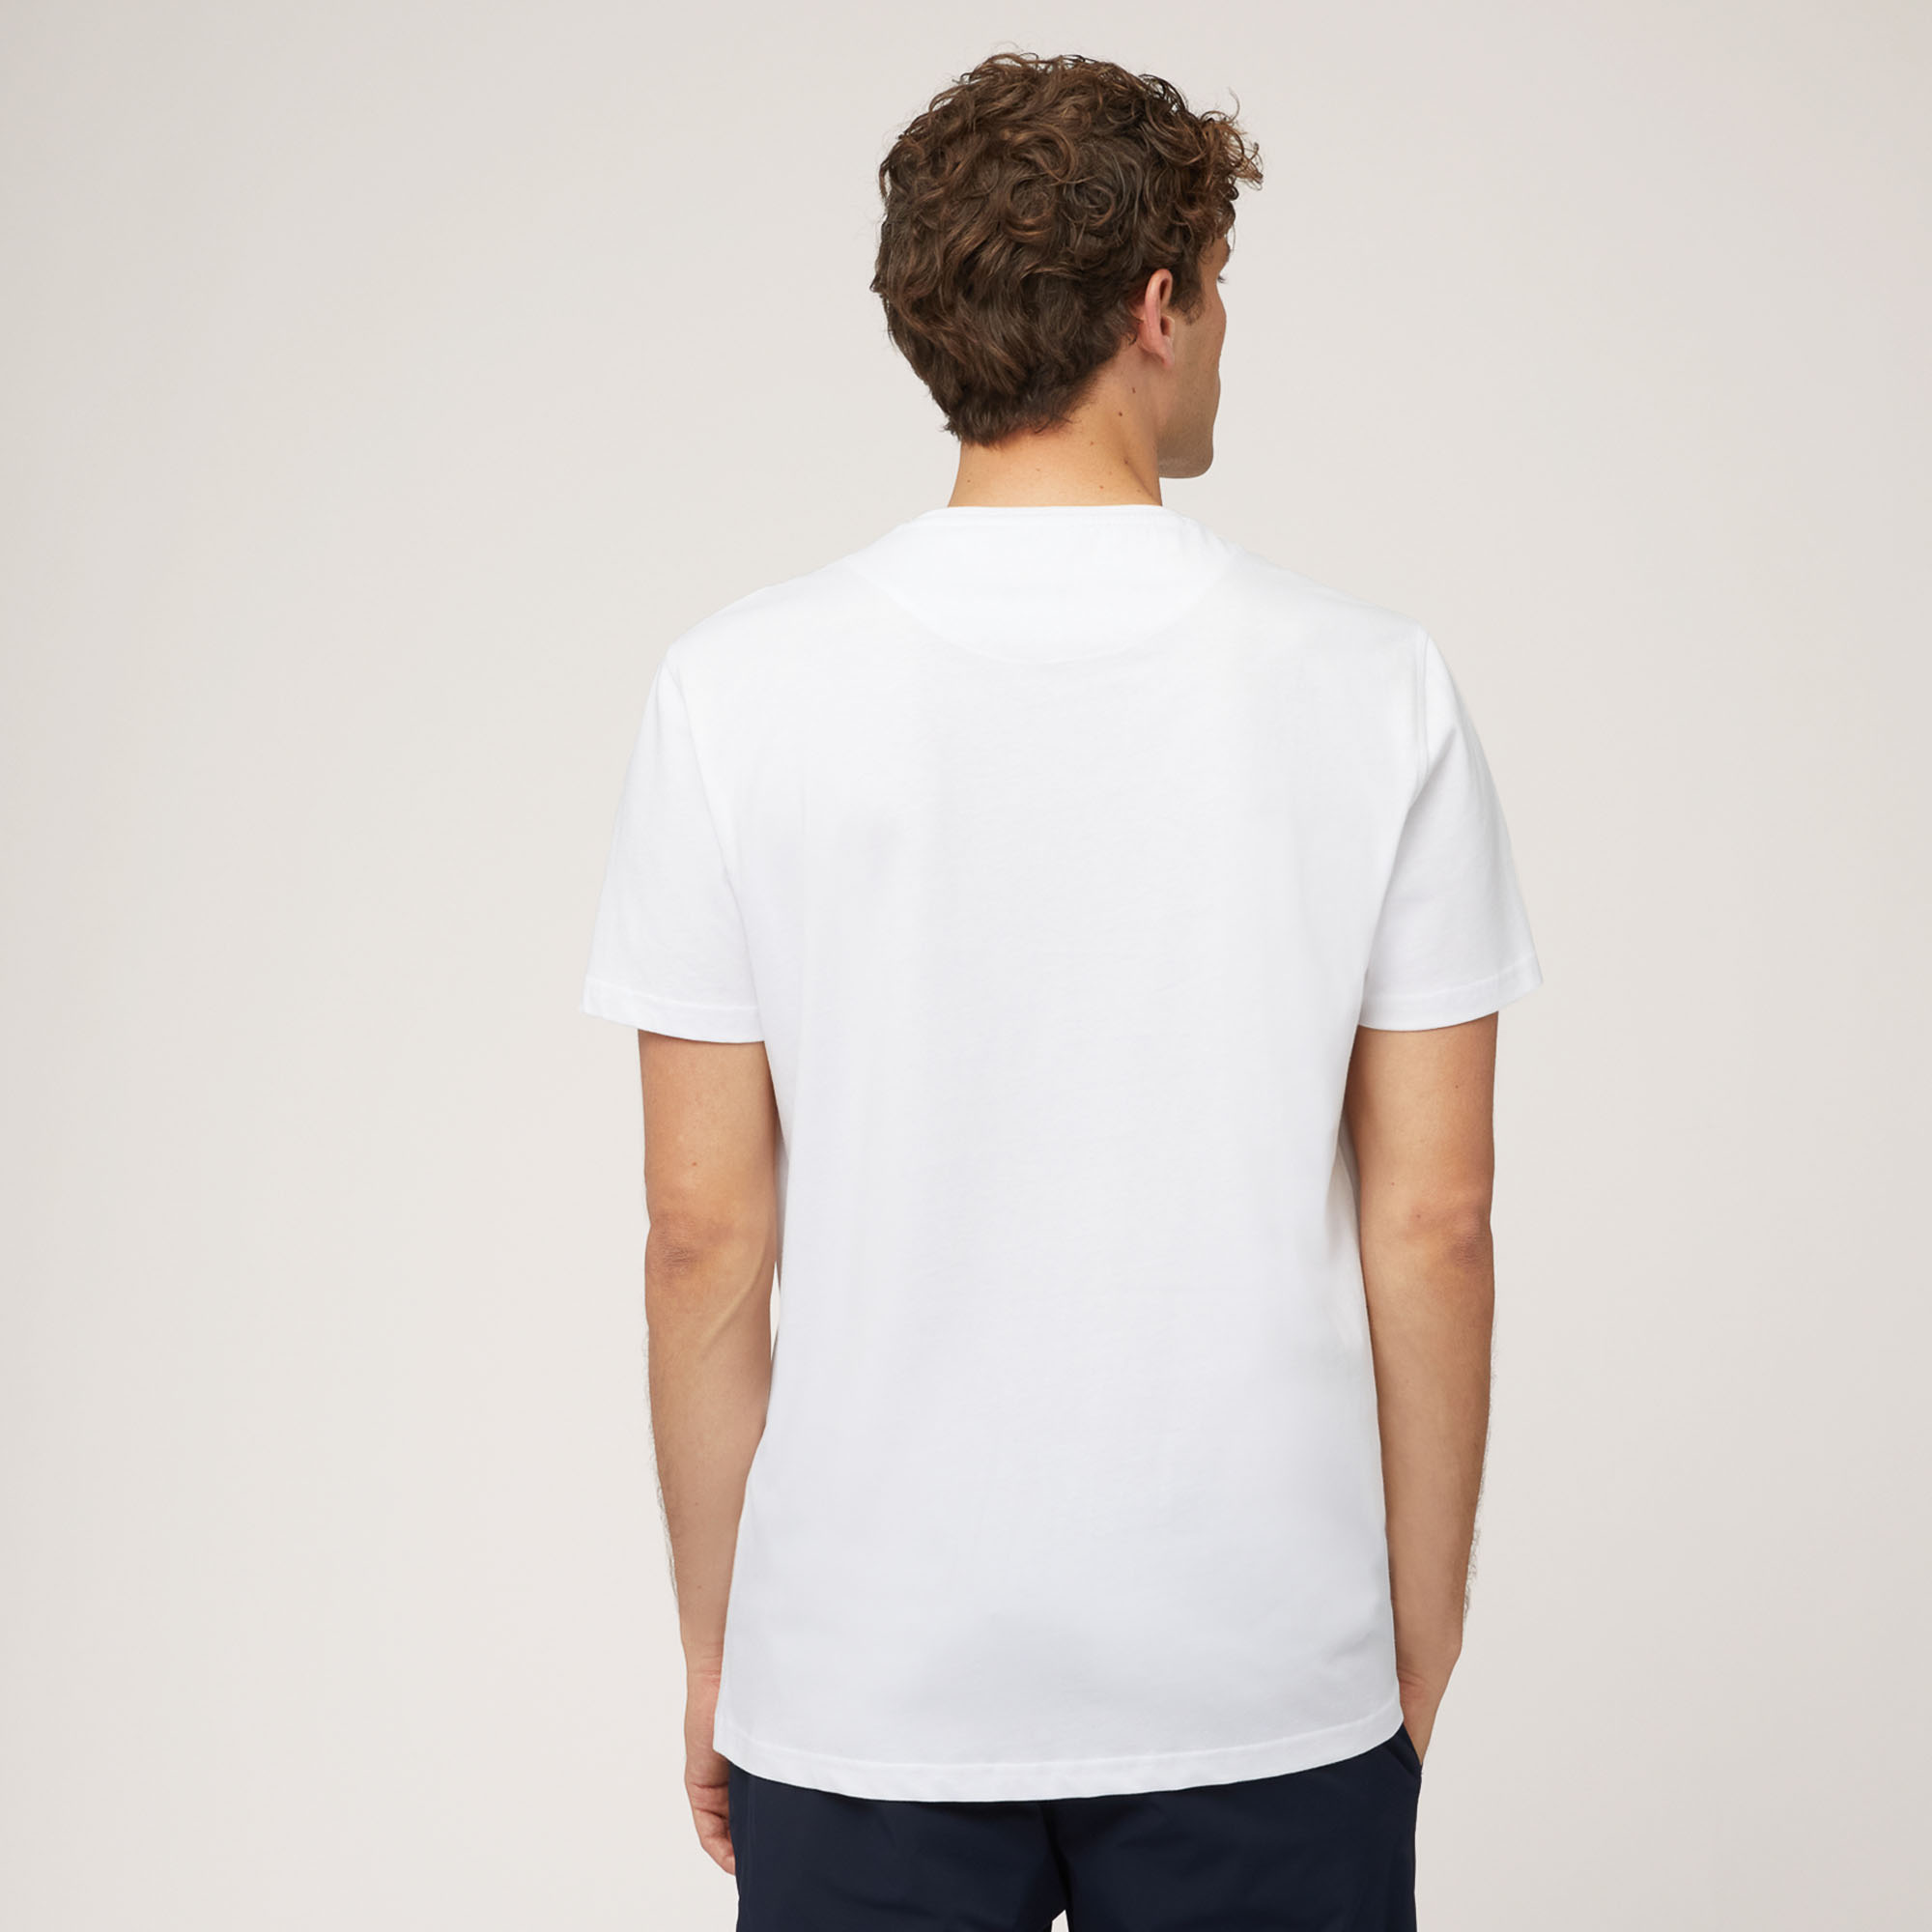 T-Shirt mit 3D-Dackel-Print, Weiß, large image number 1